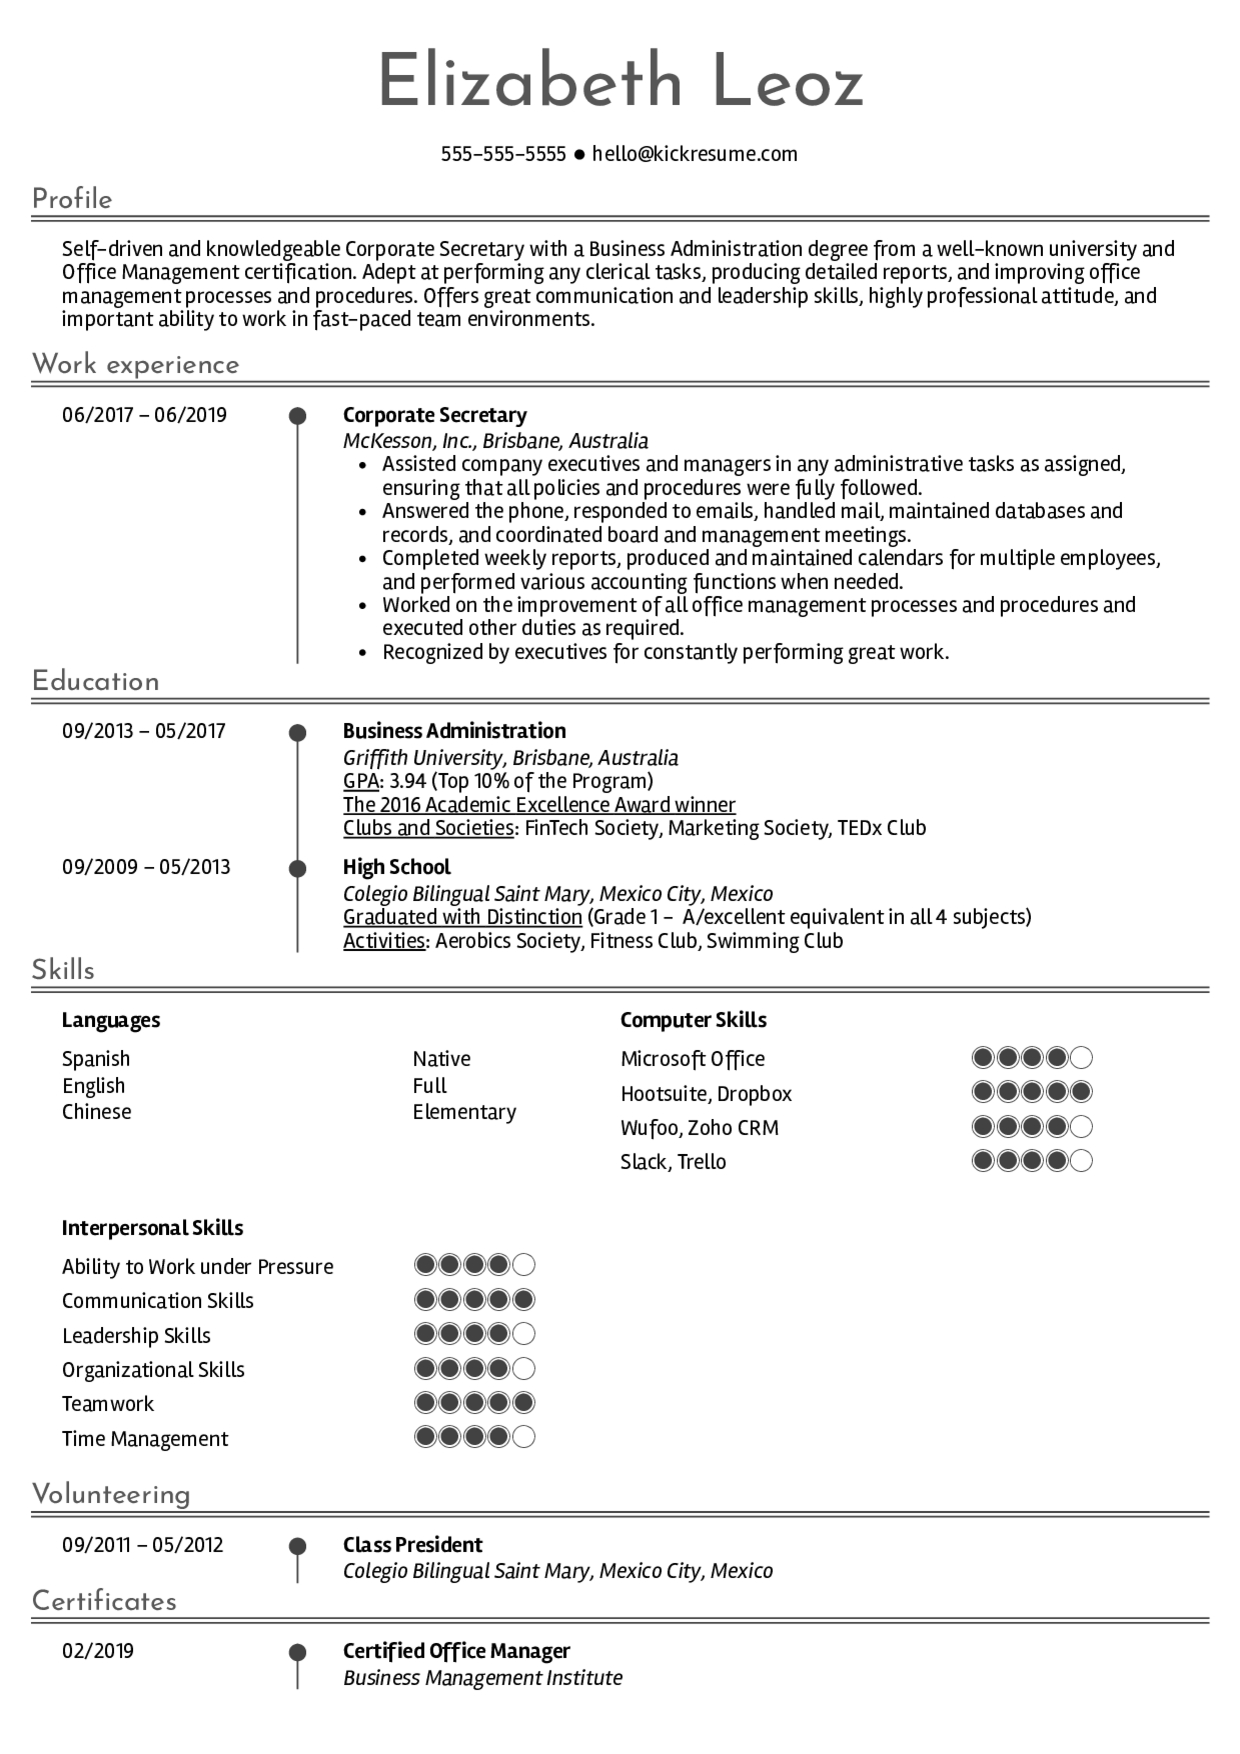 Resume Examplesreal People: Corporate Secretary Resume Pertaining To Corporate Secretary Certificate Template